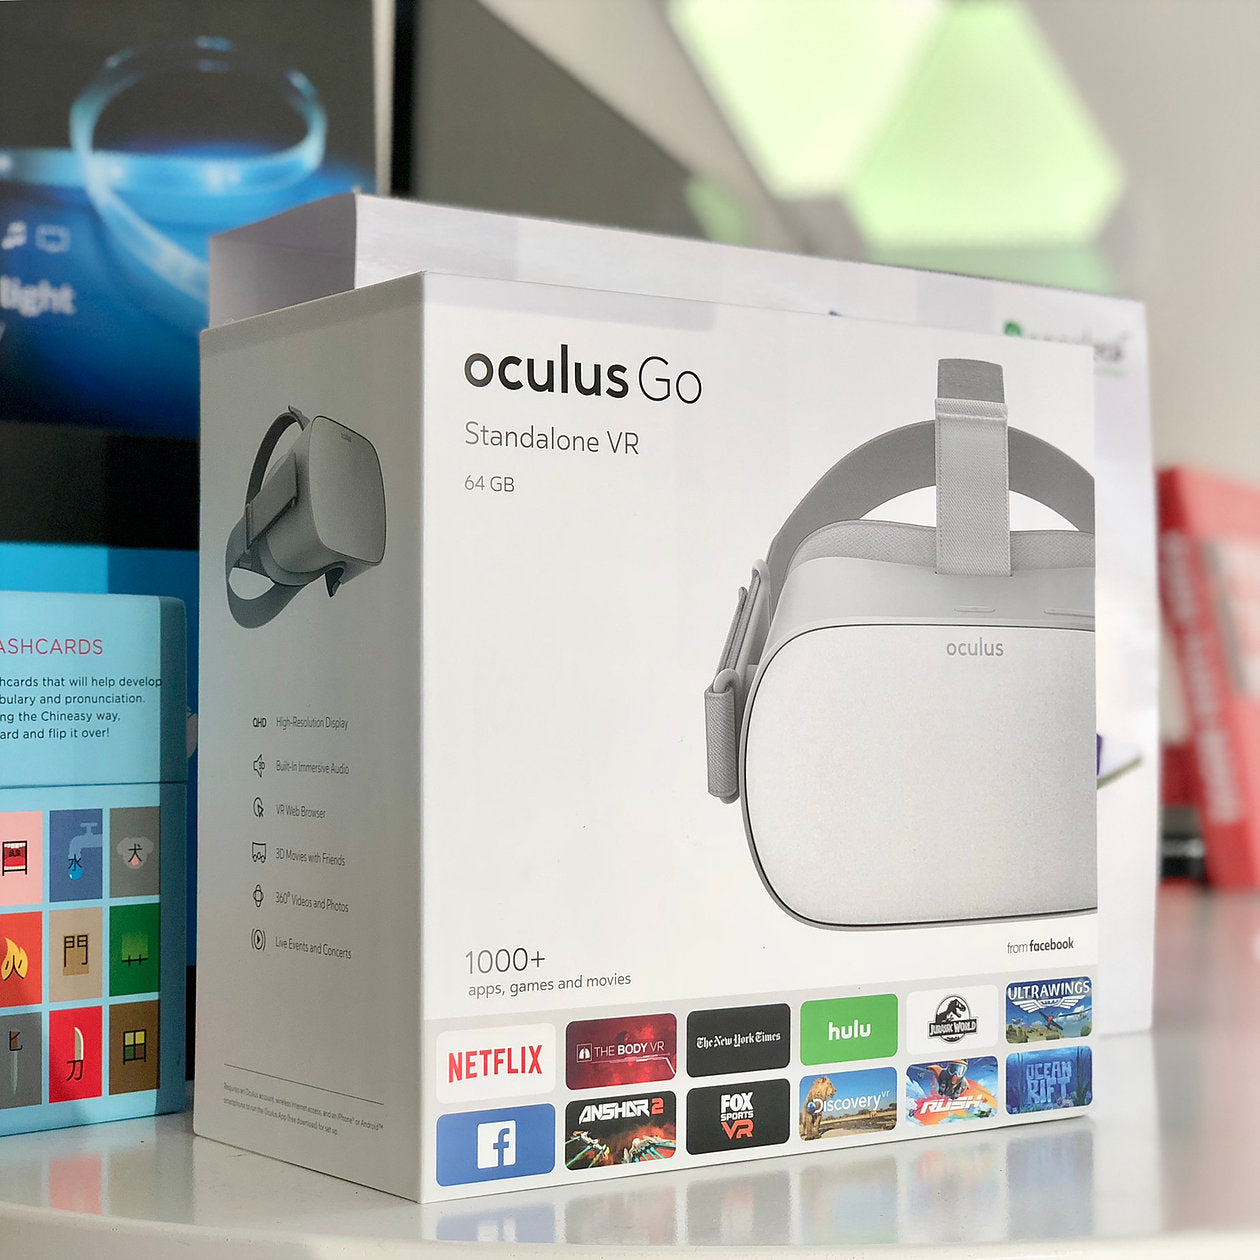 Review: ประสบการณ์การดู Netflix ด้วย Oculus Go